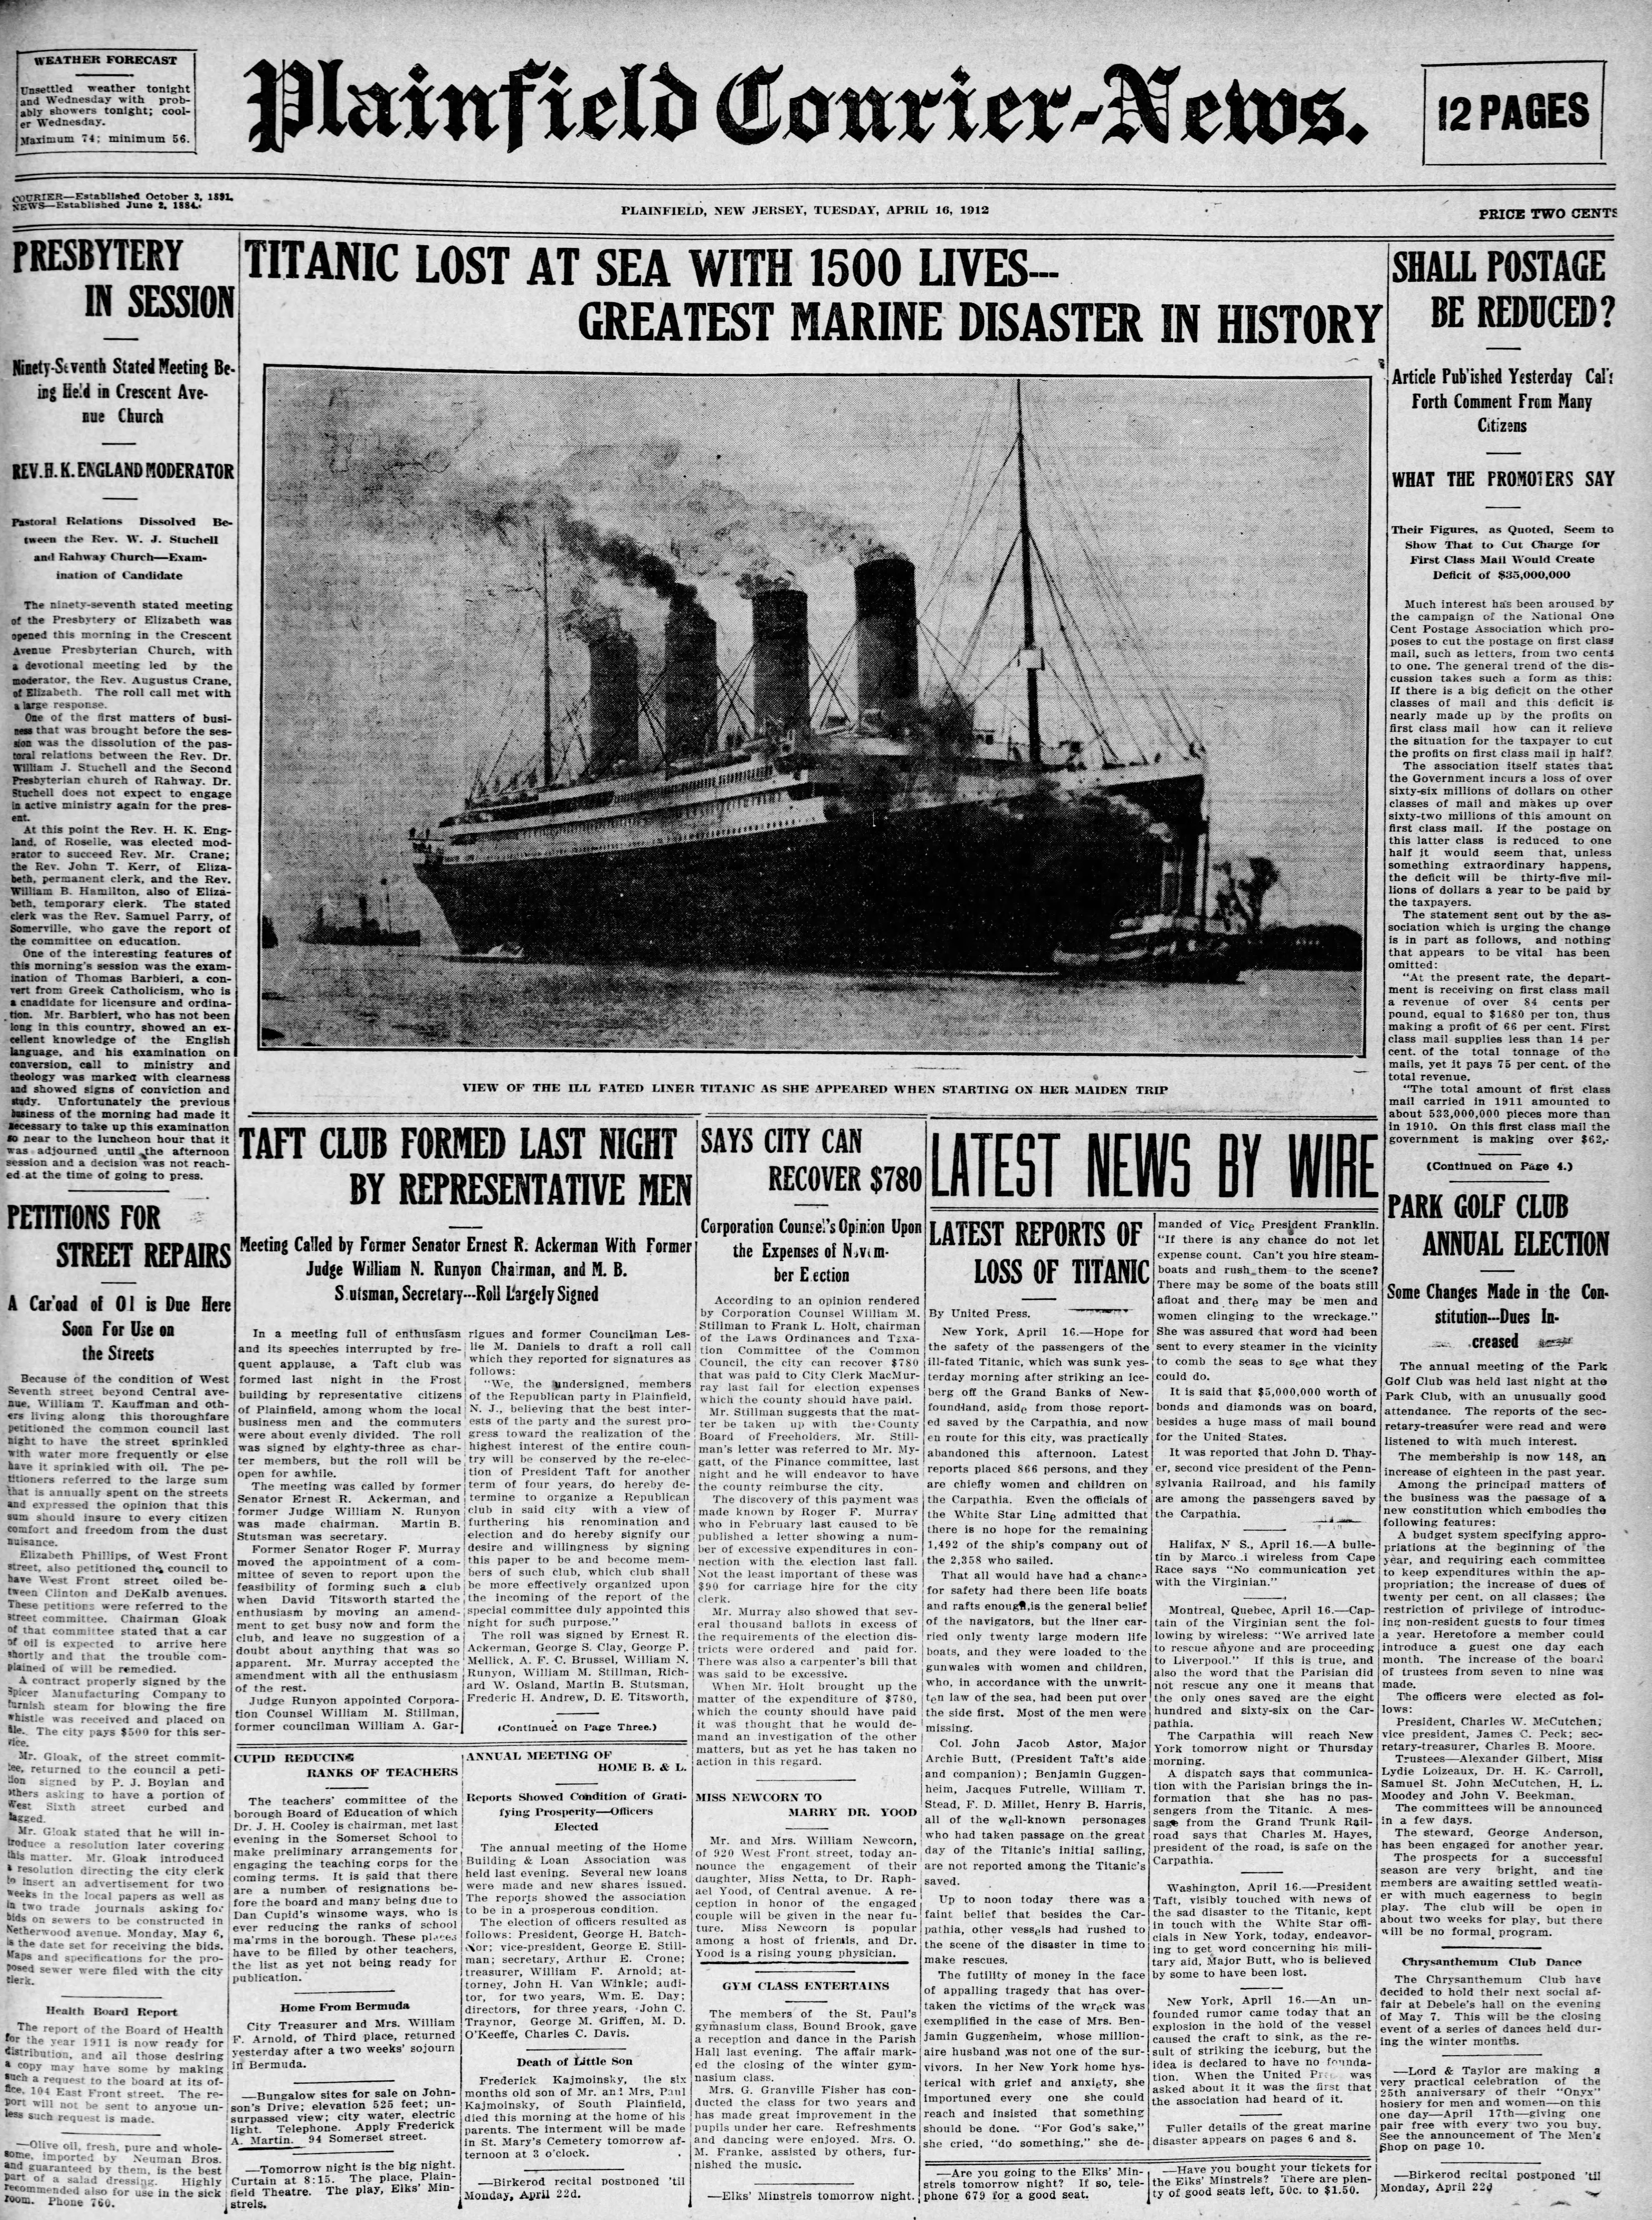 4 Bills ~ RMS TITANIC Ship that Sunk April 1912  $1,000,000 One Million Dollars 